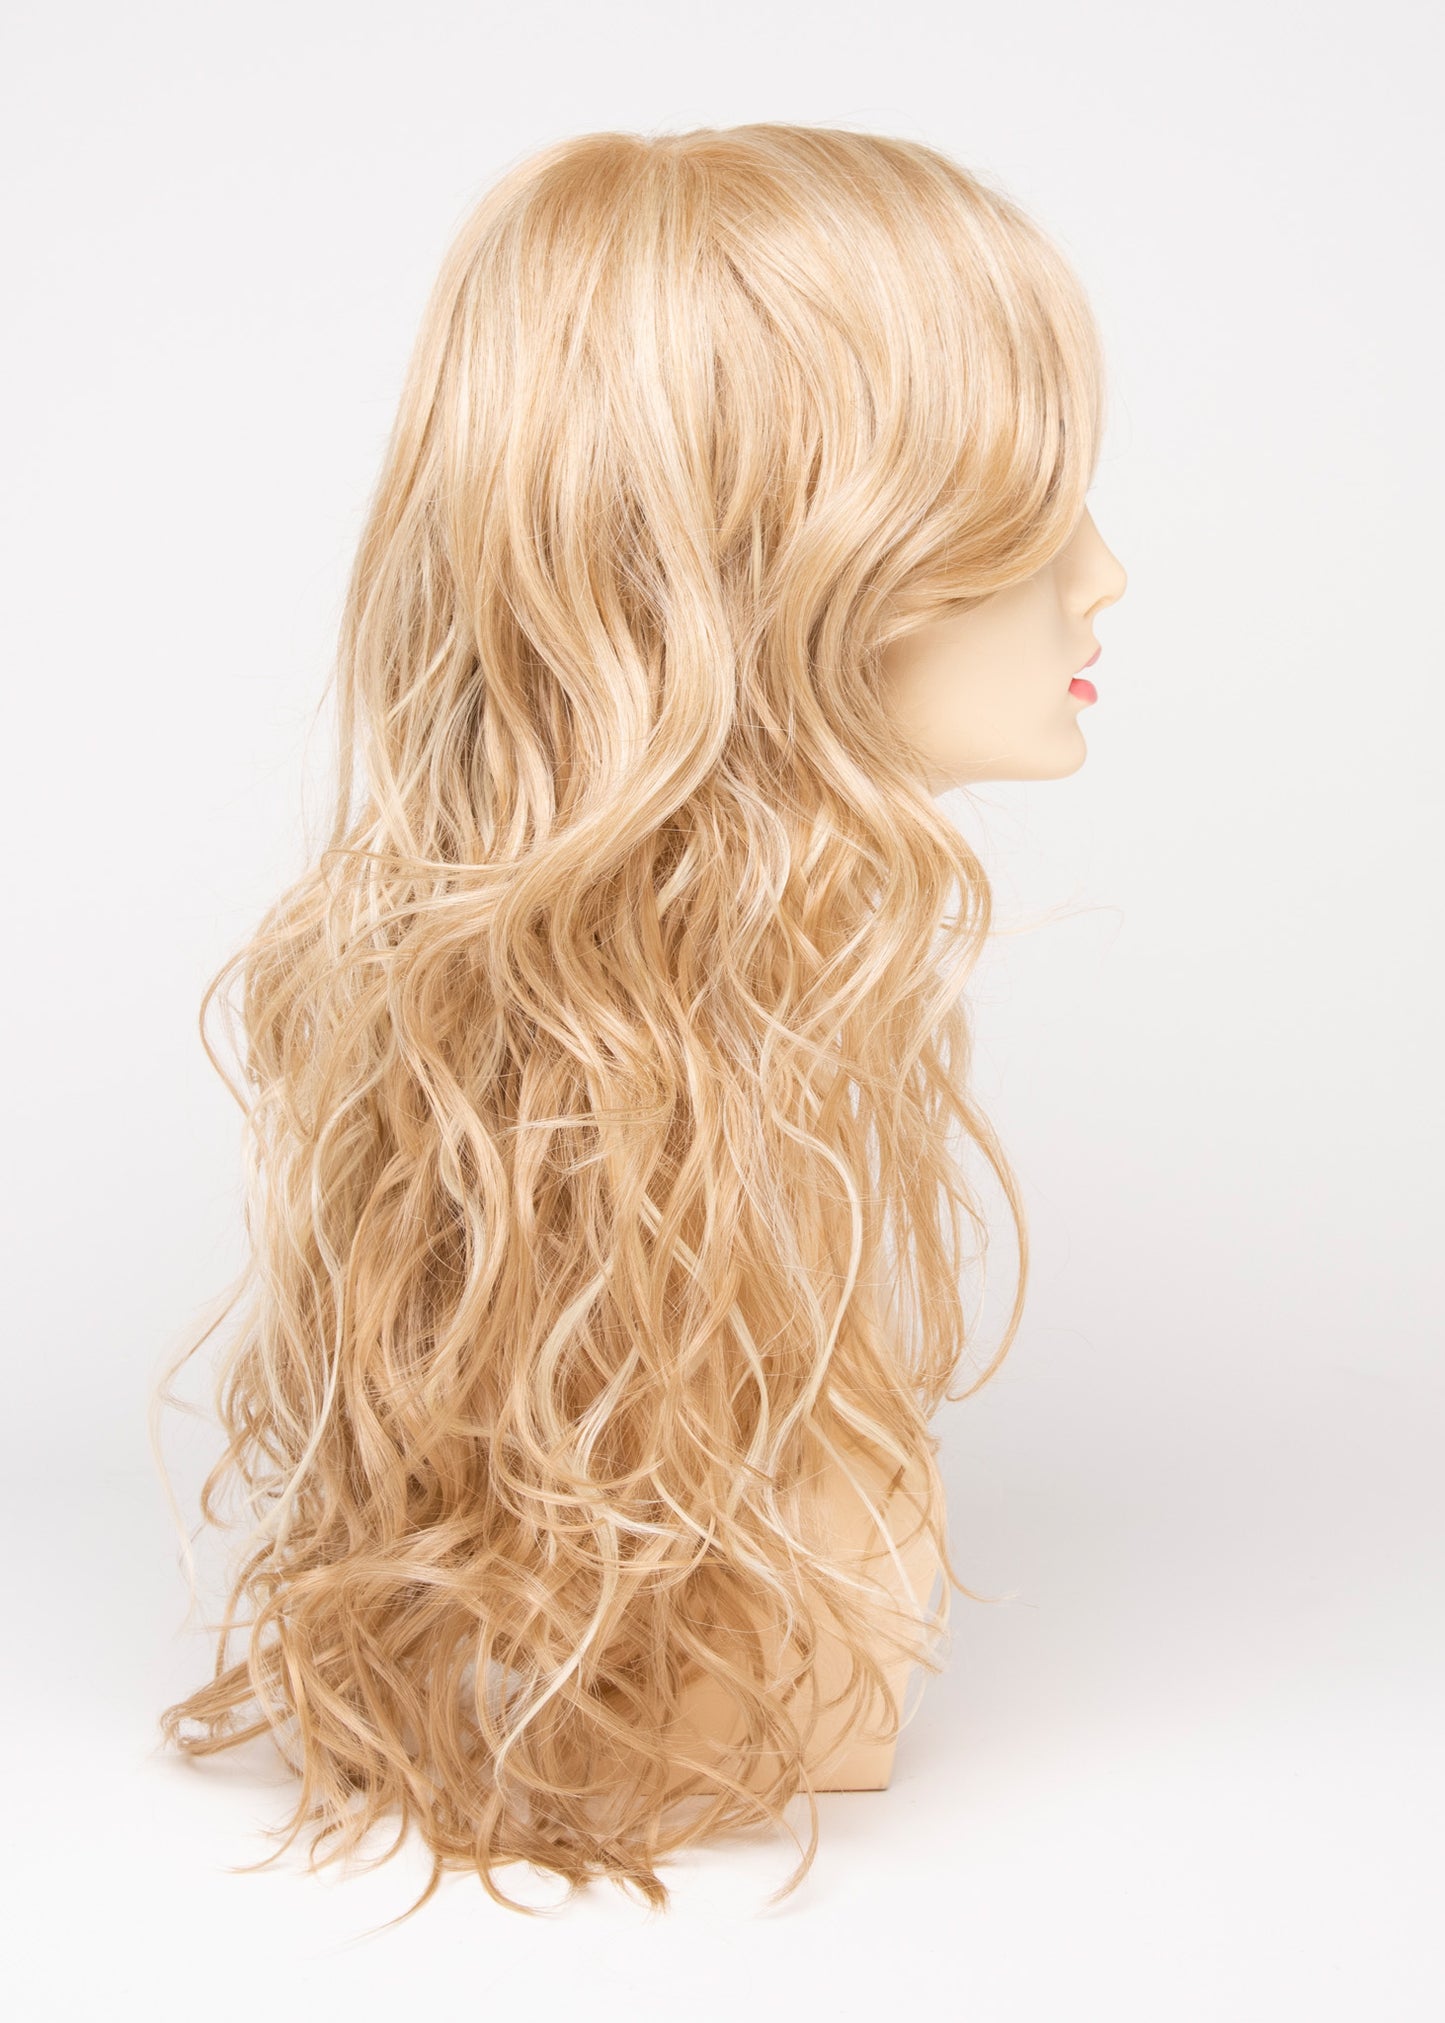 Krista - EnvyHair Human Hair Synthetic Blend Mono Top Wig by Envy